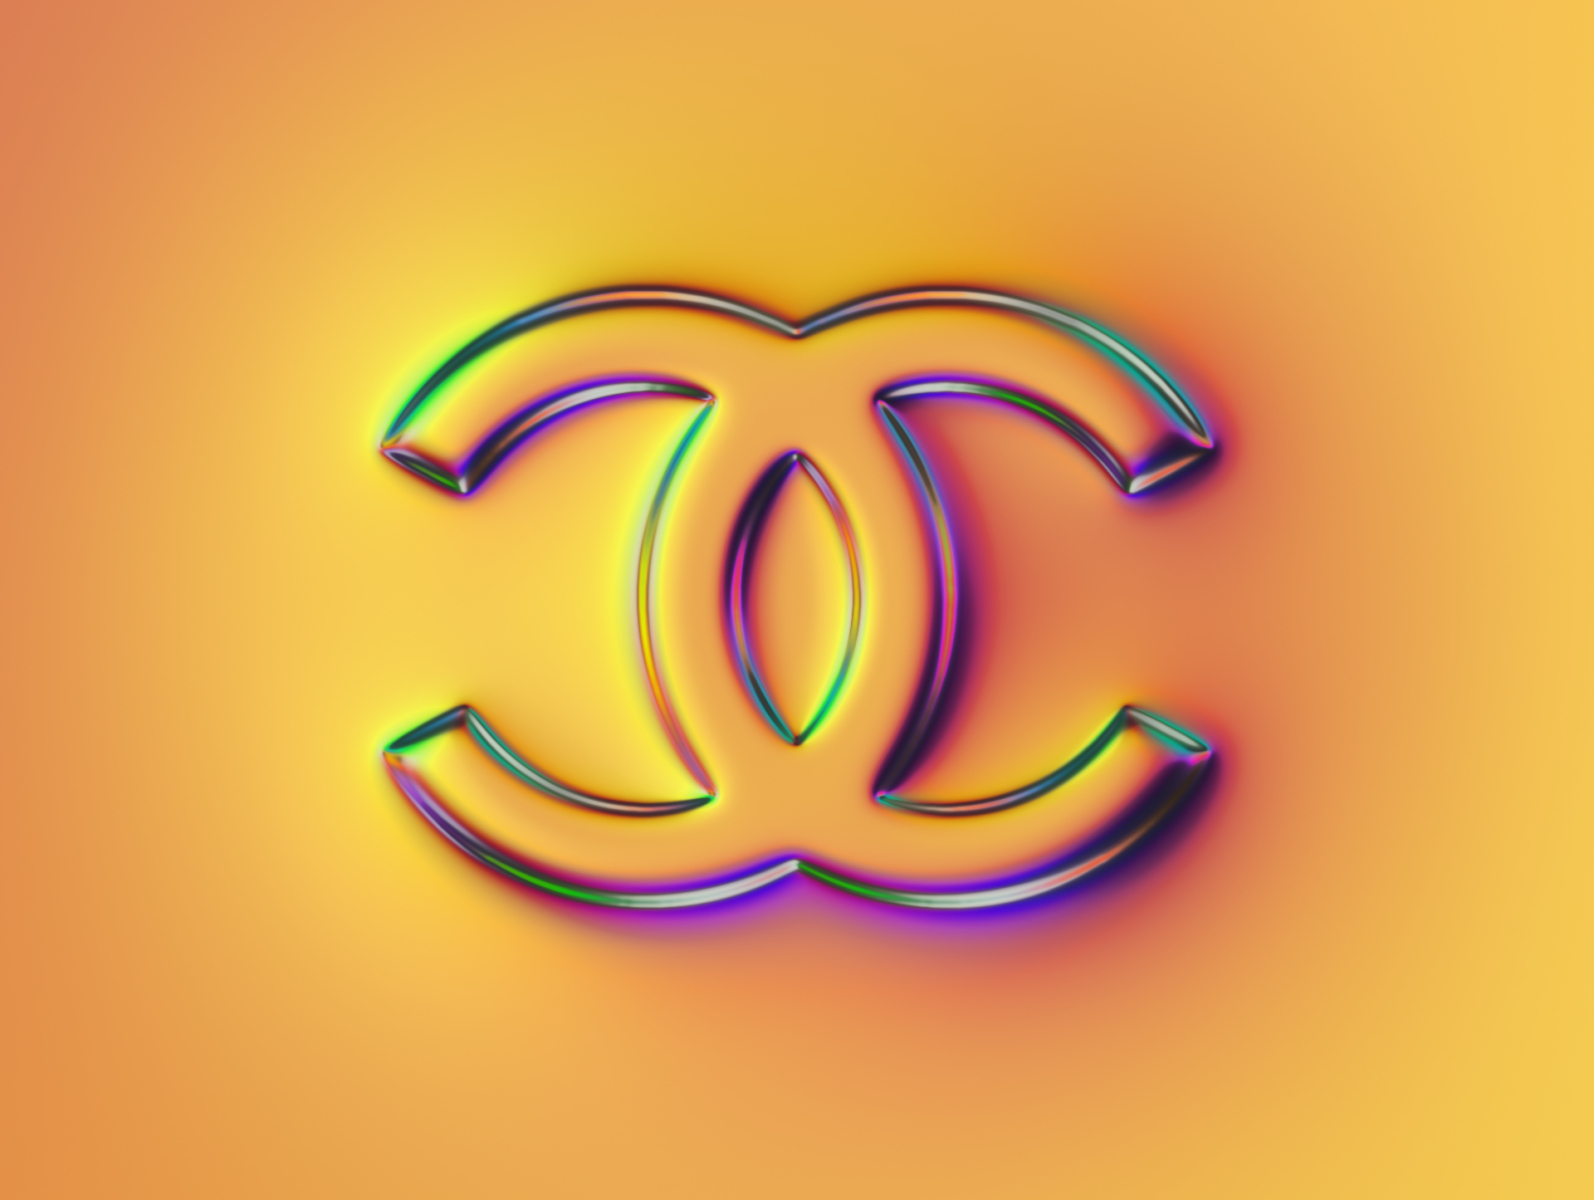 36 logos - Chanel by Martin Naumann on Dribbble